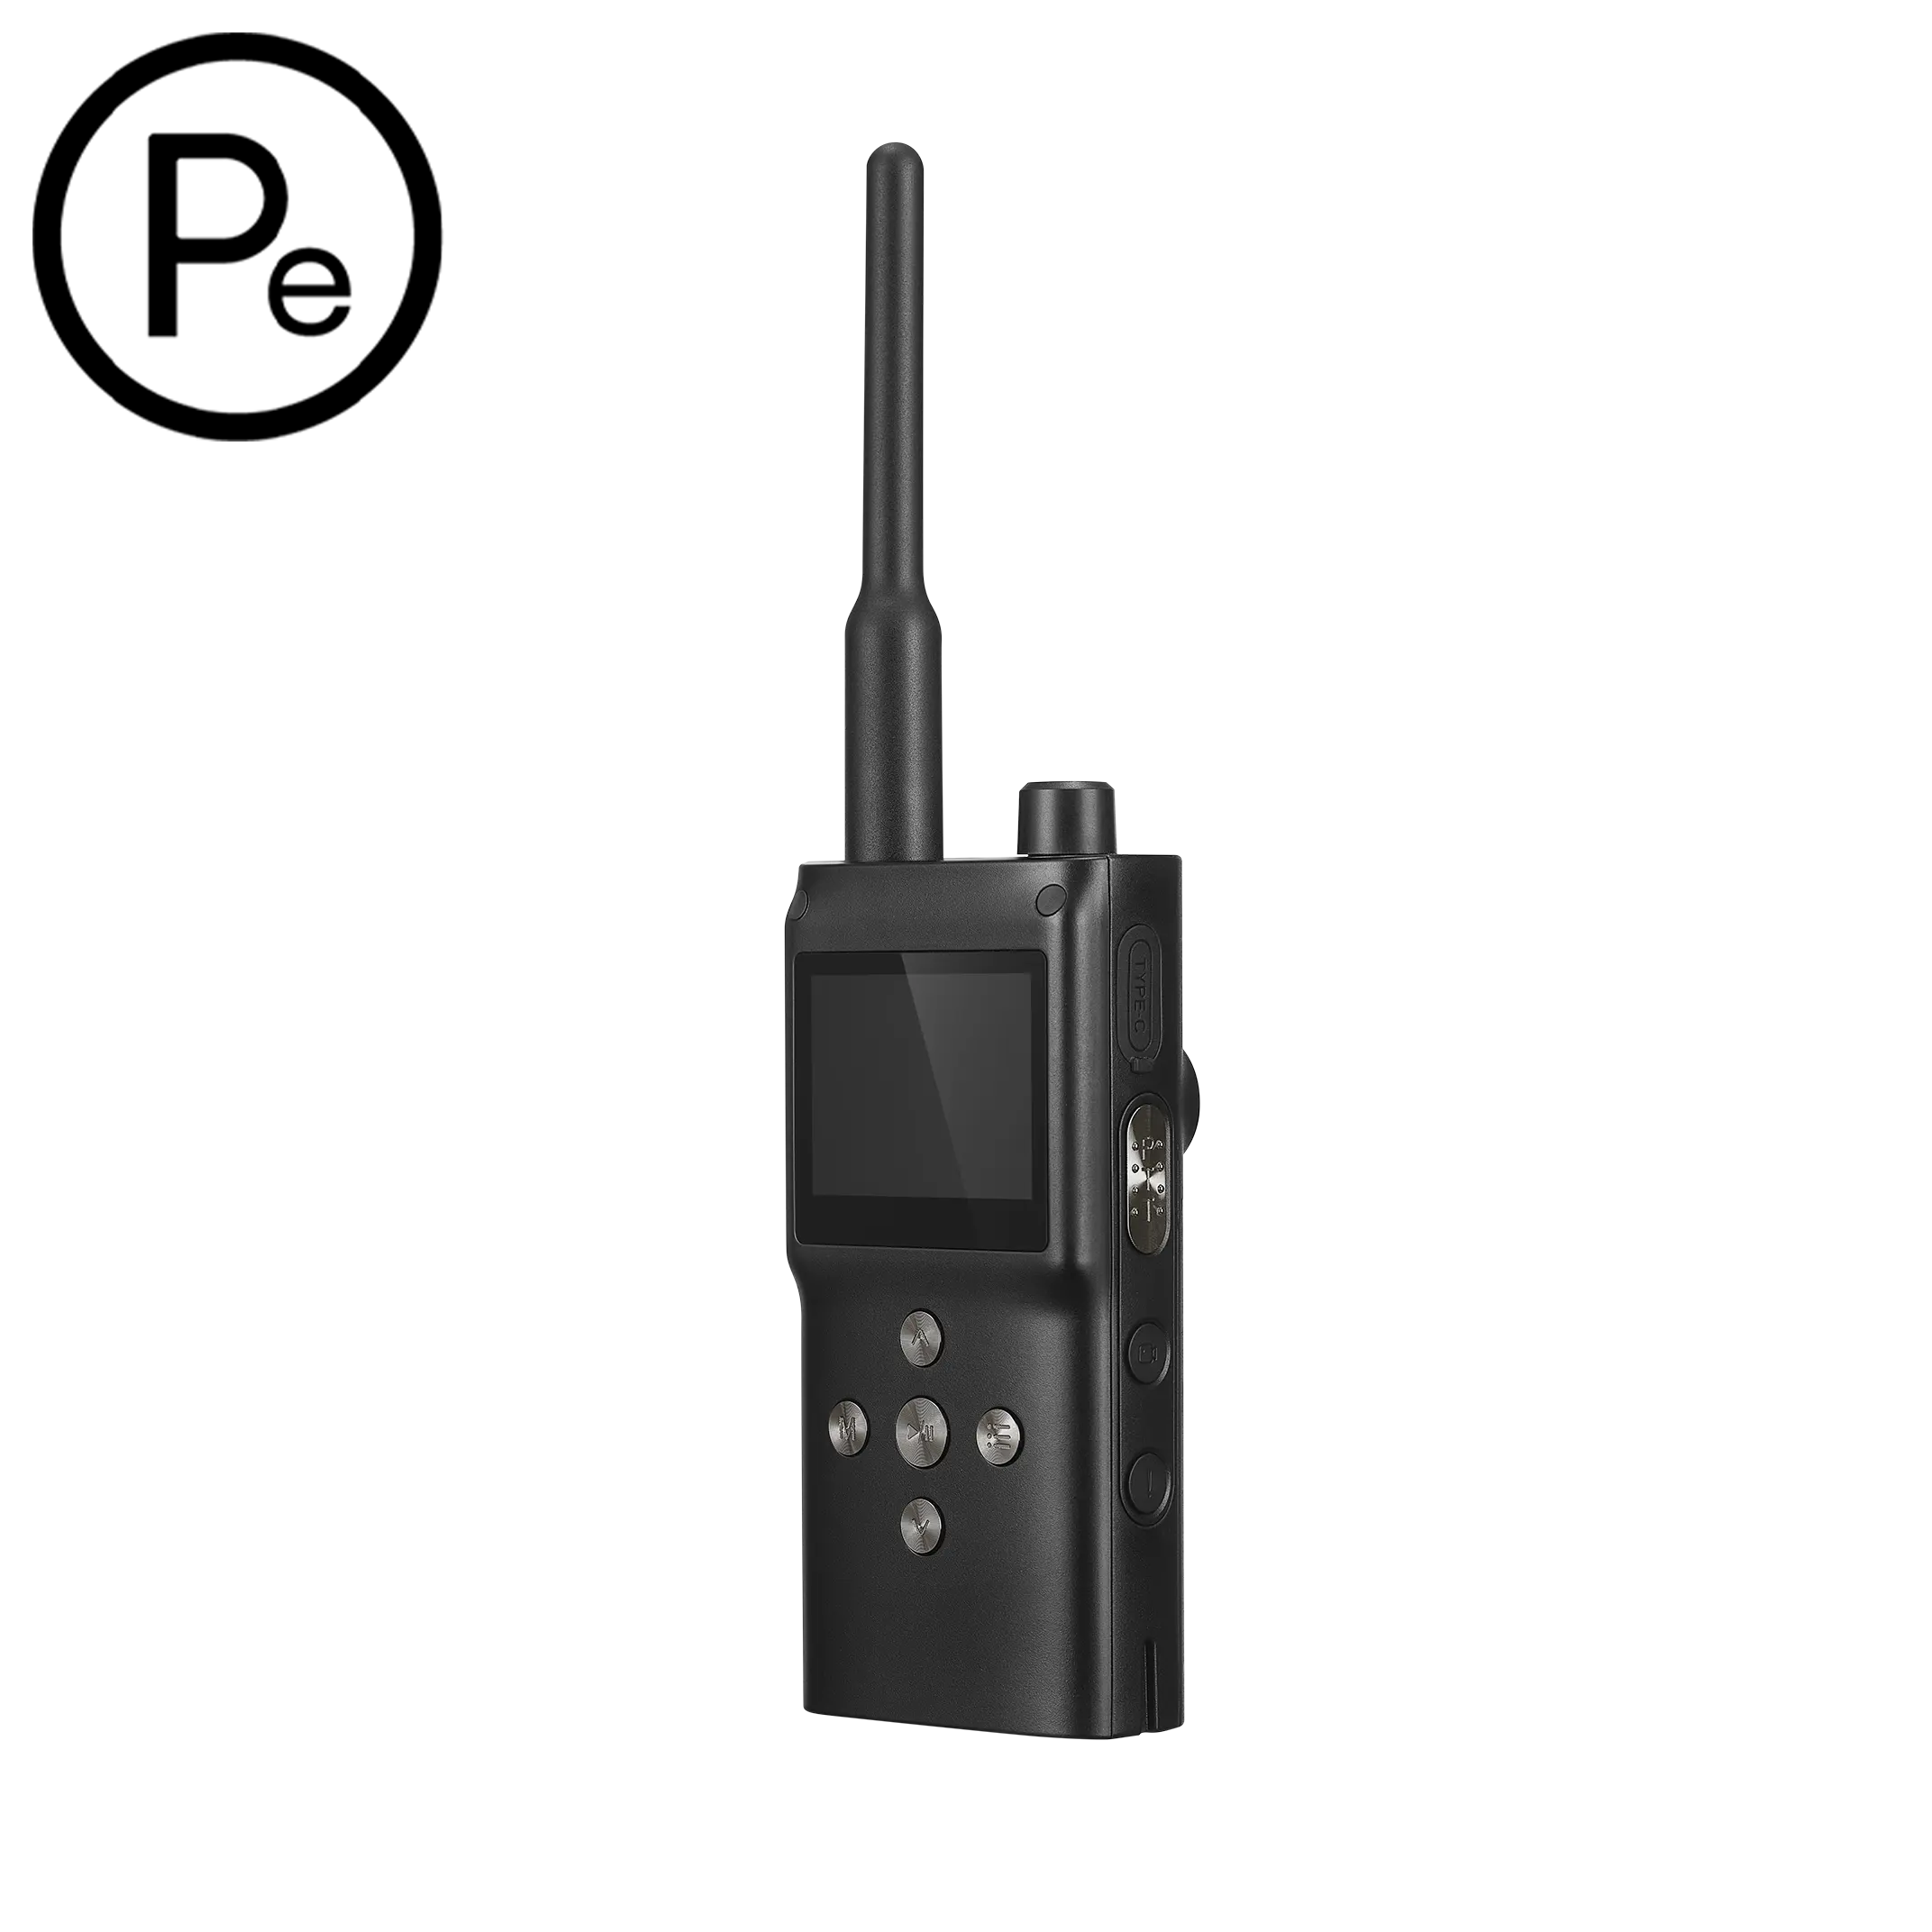 ETSI DMR radio Body Worn Camera DMR radio Radio Bodycam Analog DMR digital walkie talkie